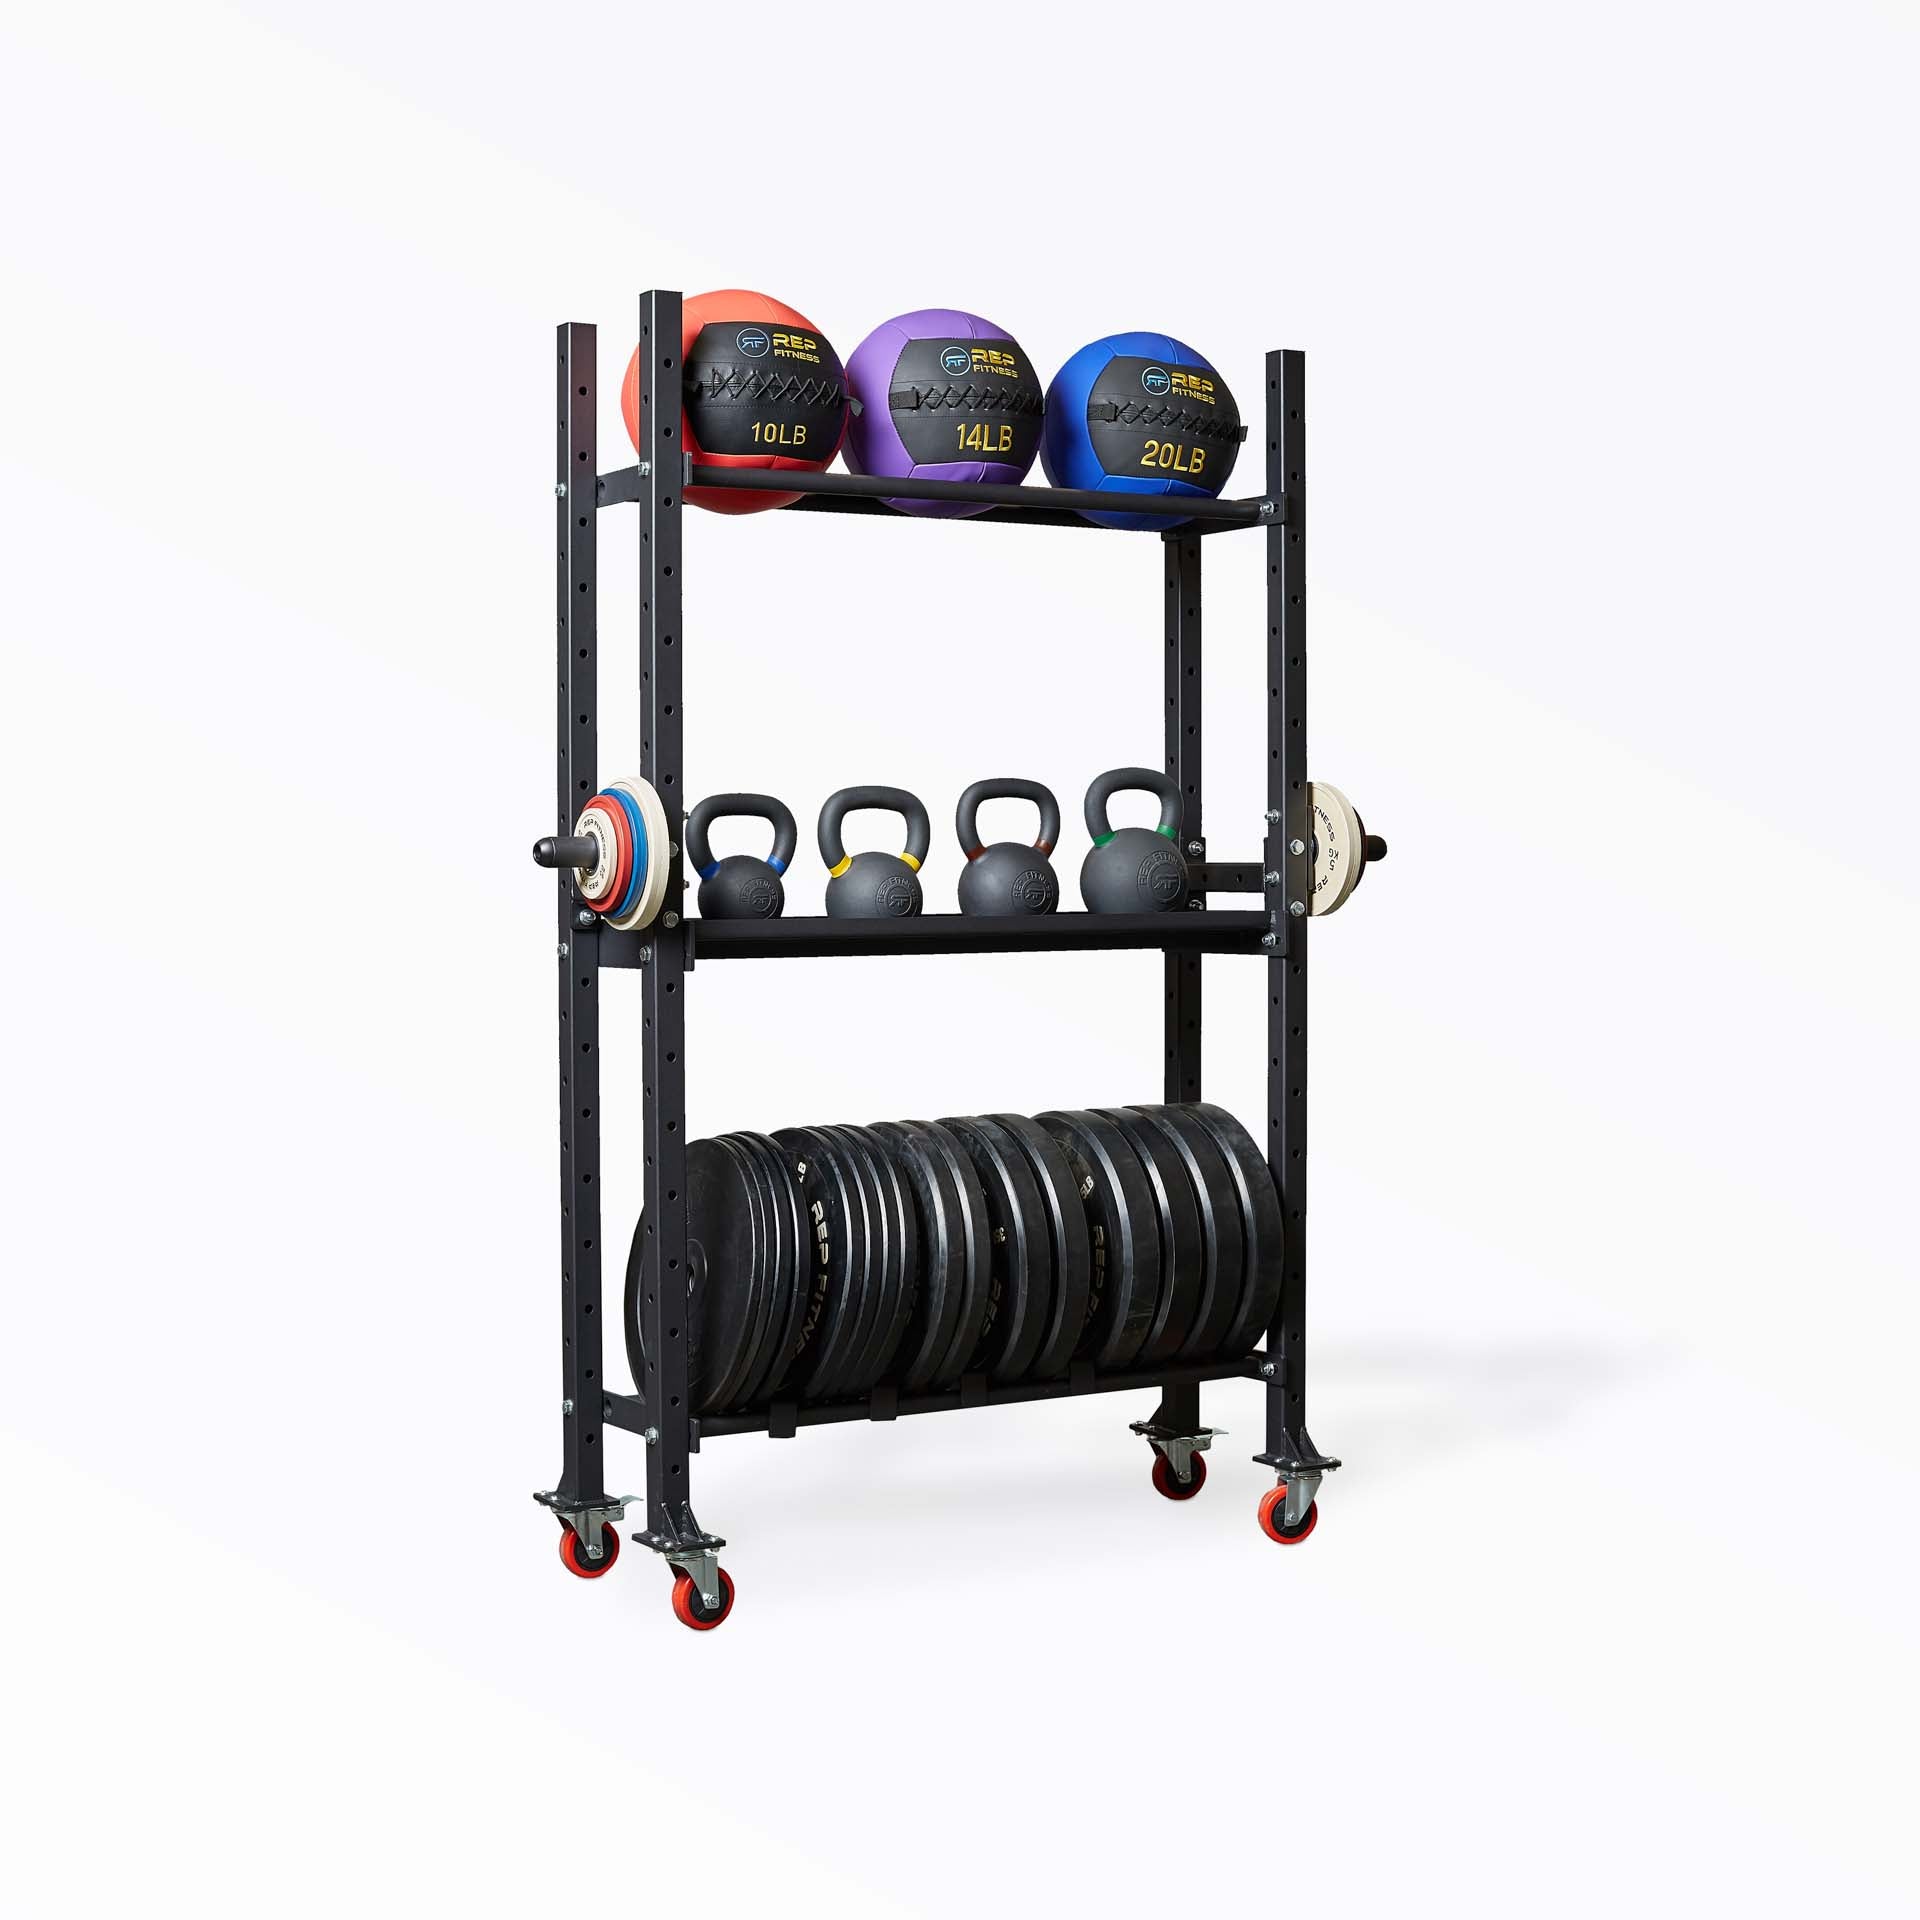 Preconfigured MSS Storage System 1 shown storing bumper plates, kettlebells, medicine balls, and change plates.